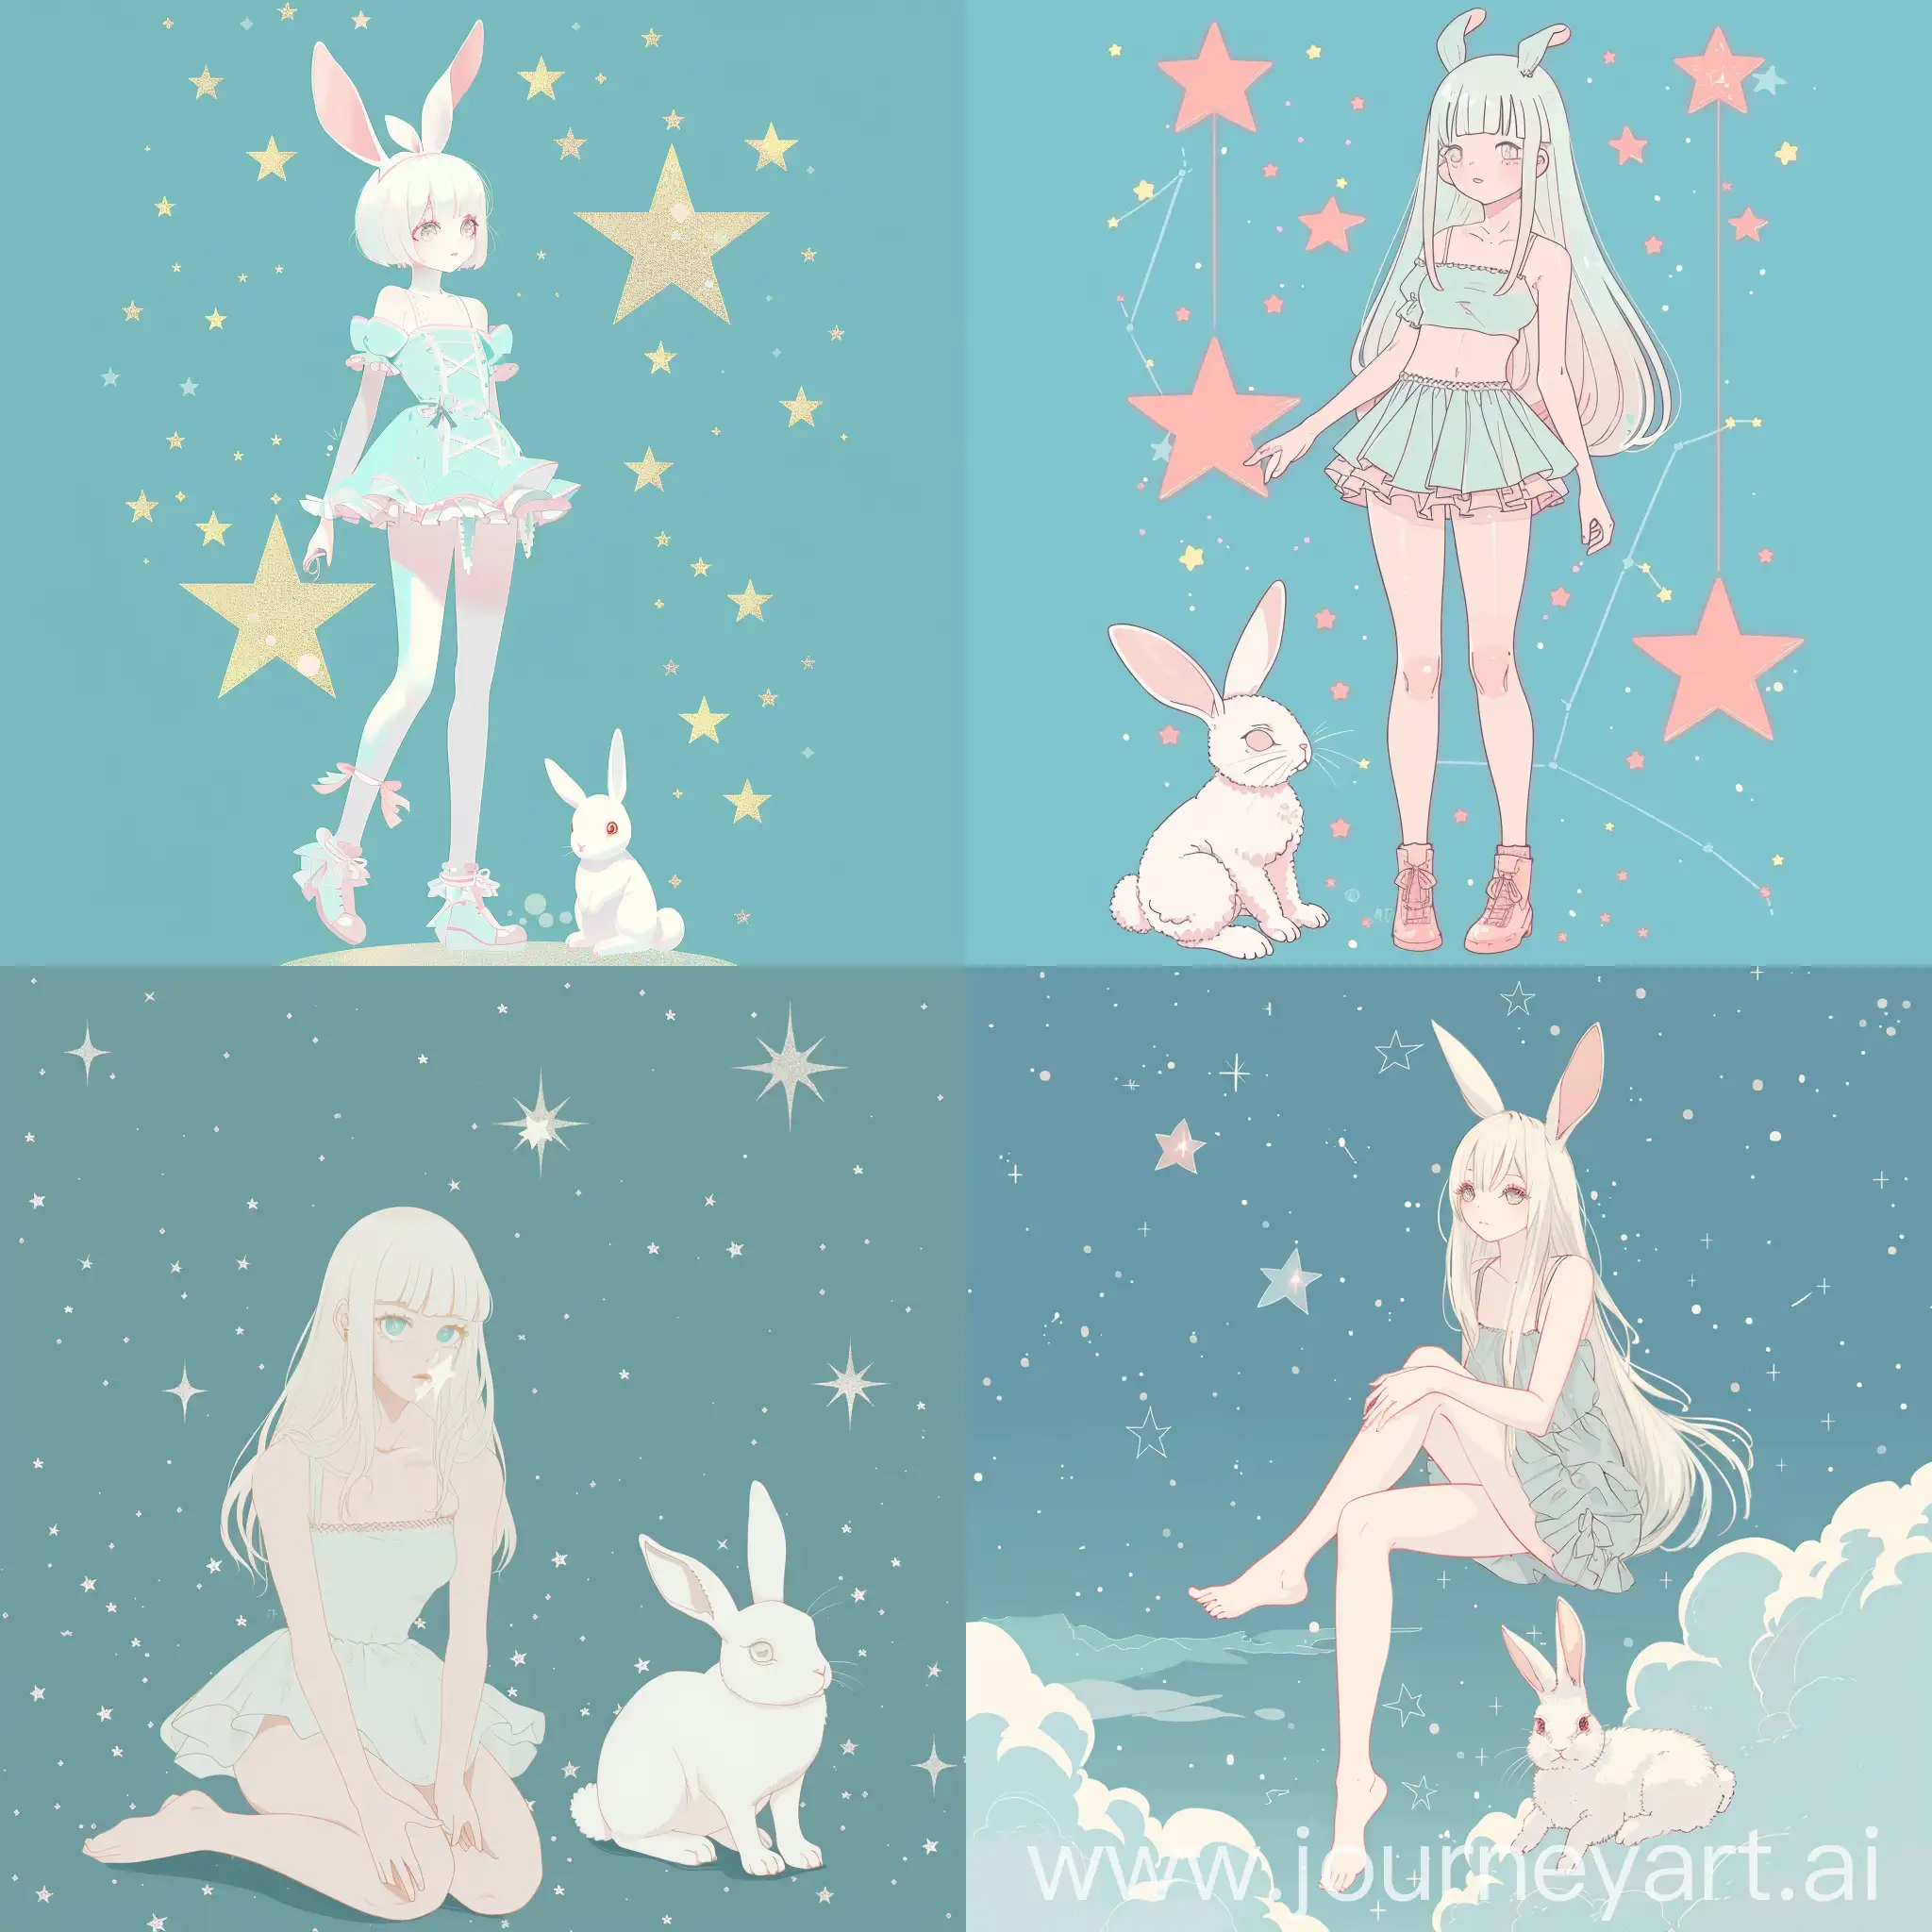 Enchanting-Pastel-Illustration-Albino-Anime-Girl-with-Rabbit-under-Starry-Sky